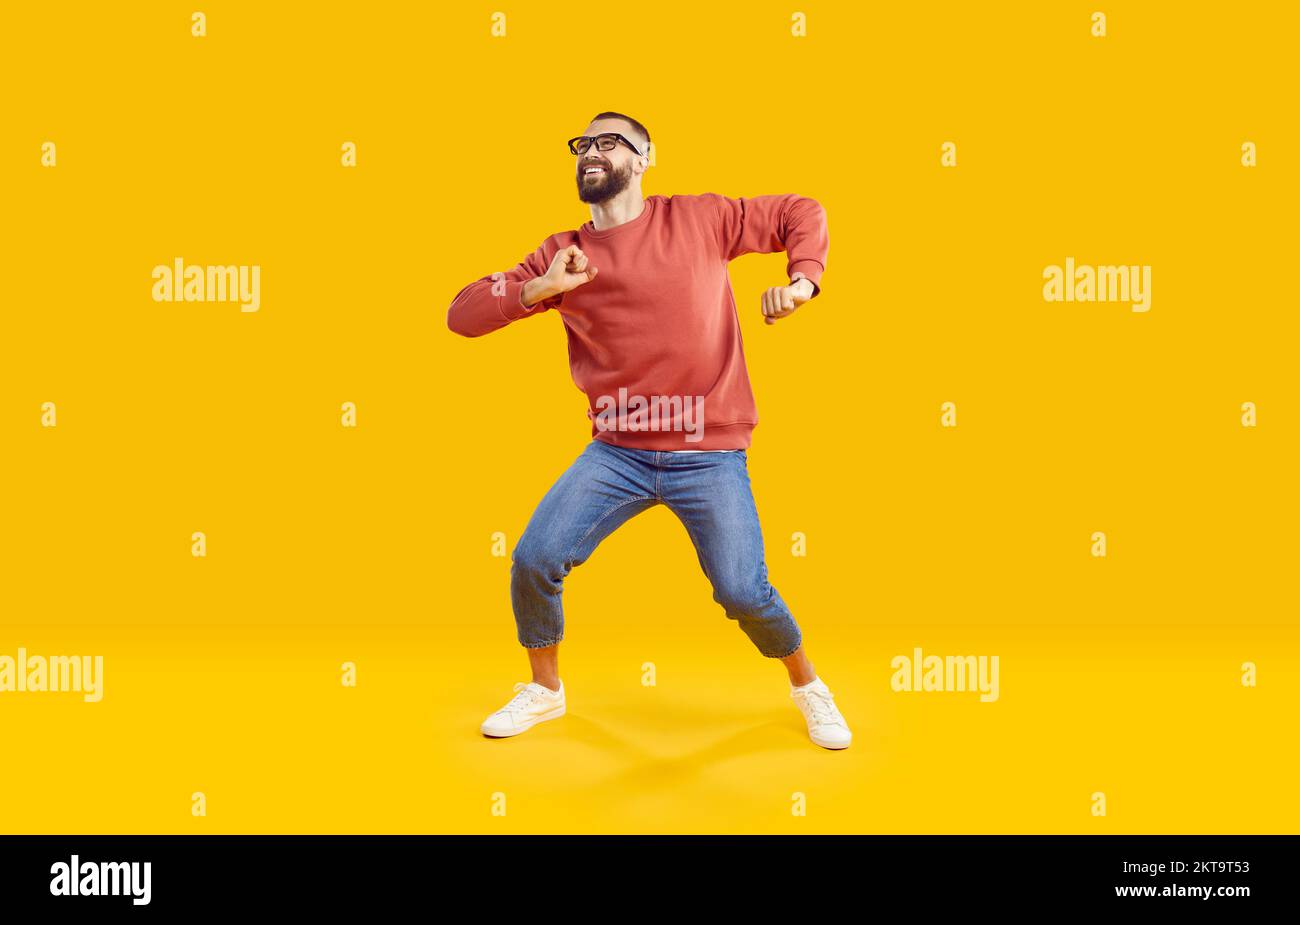 Cheerful active man enjoying life, rejoicing, dancing and having fun on orange background. Stock Photo